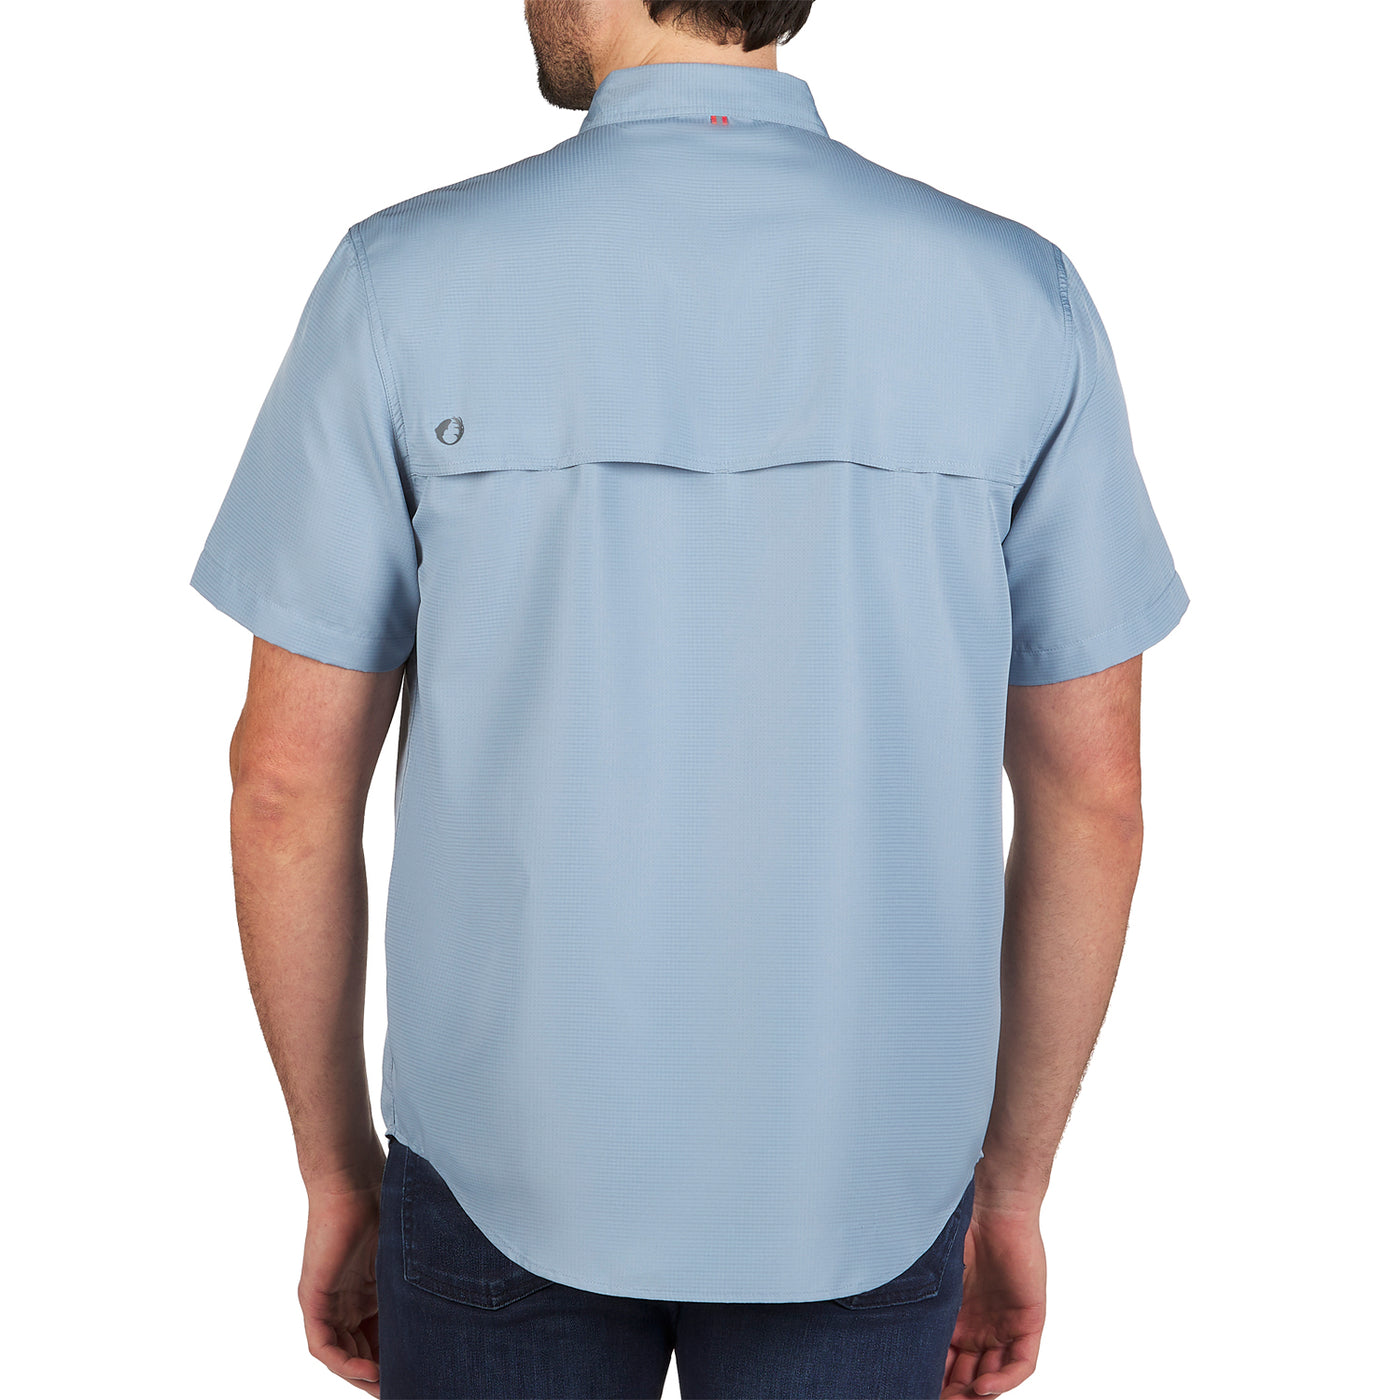 The American Outdoorsman size Medium Men’s Blue Short Sleeve Fishing Shirt  NWT